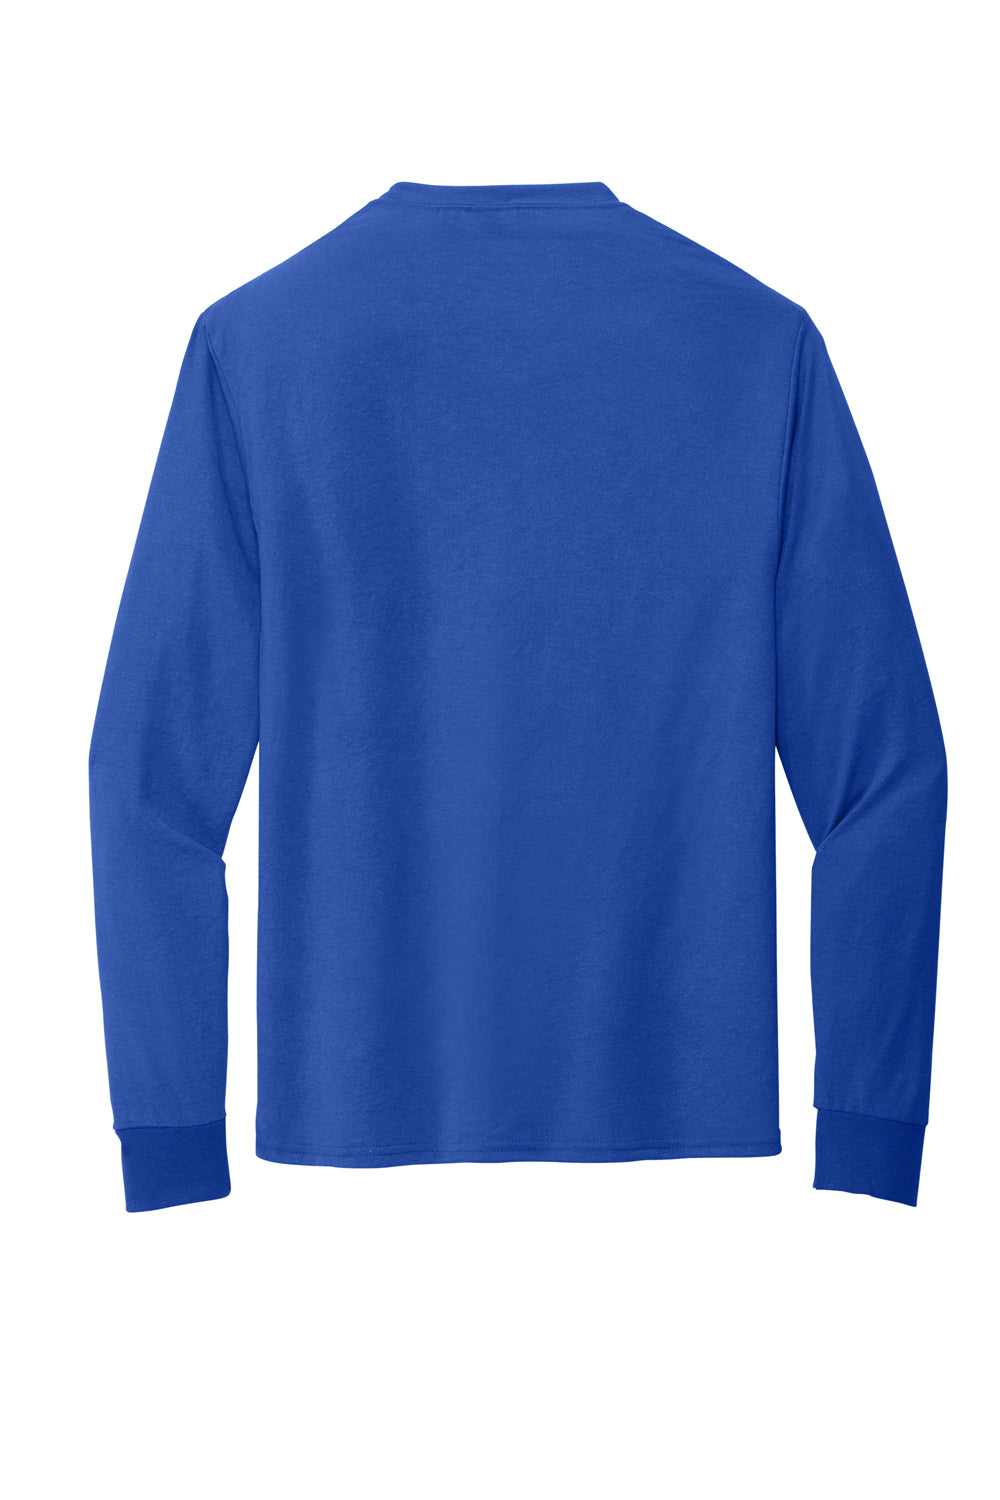 Jerzees 21LS Dri-Power Long Sleeve Crewneck T-Shirt Royal Blue Flat Back